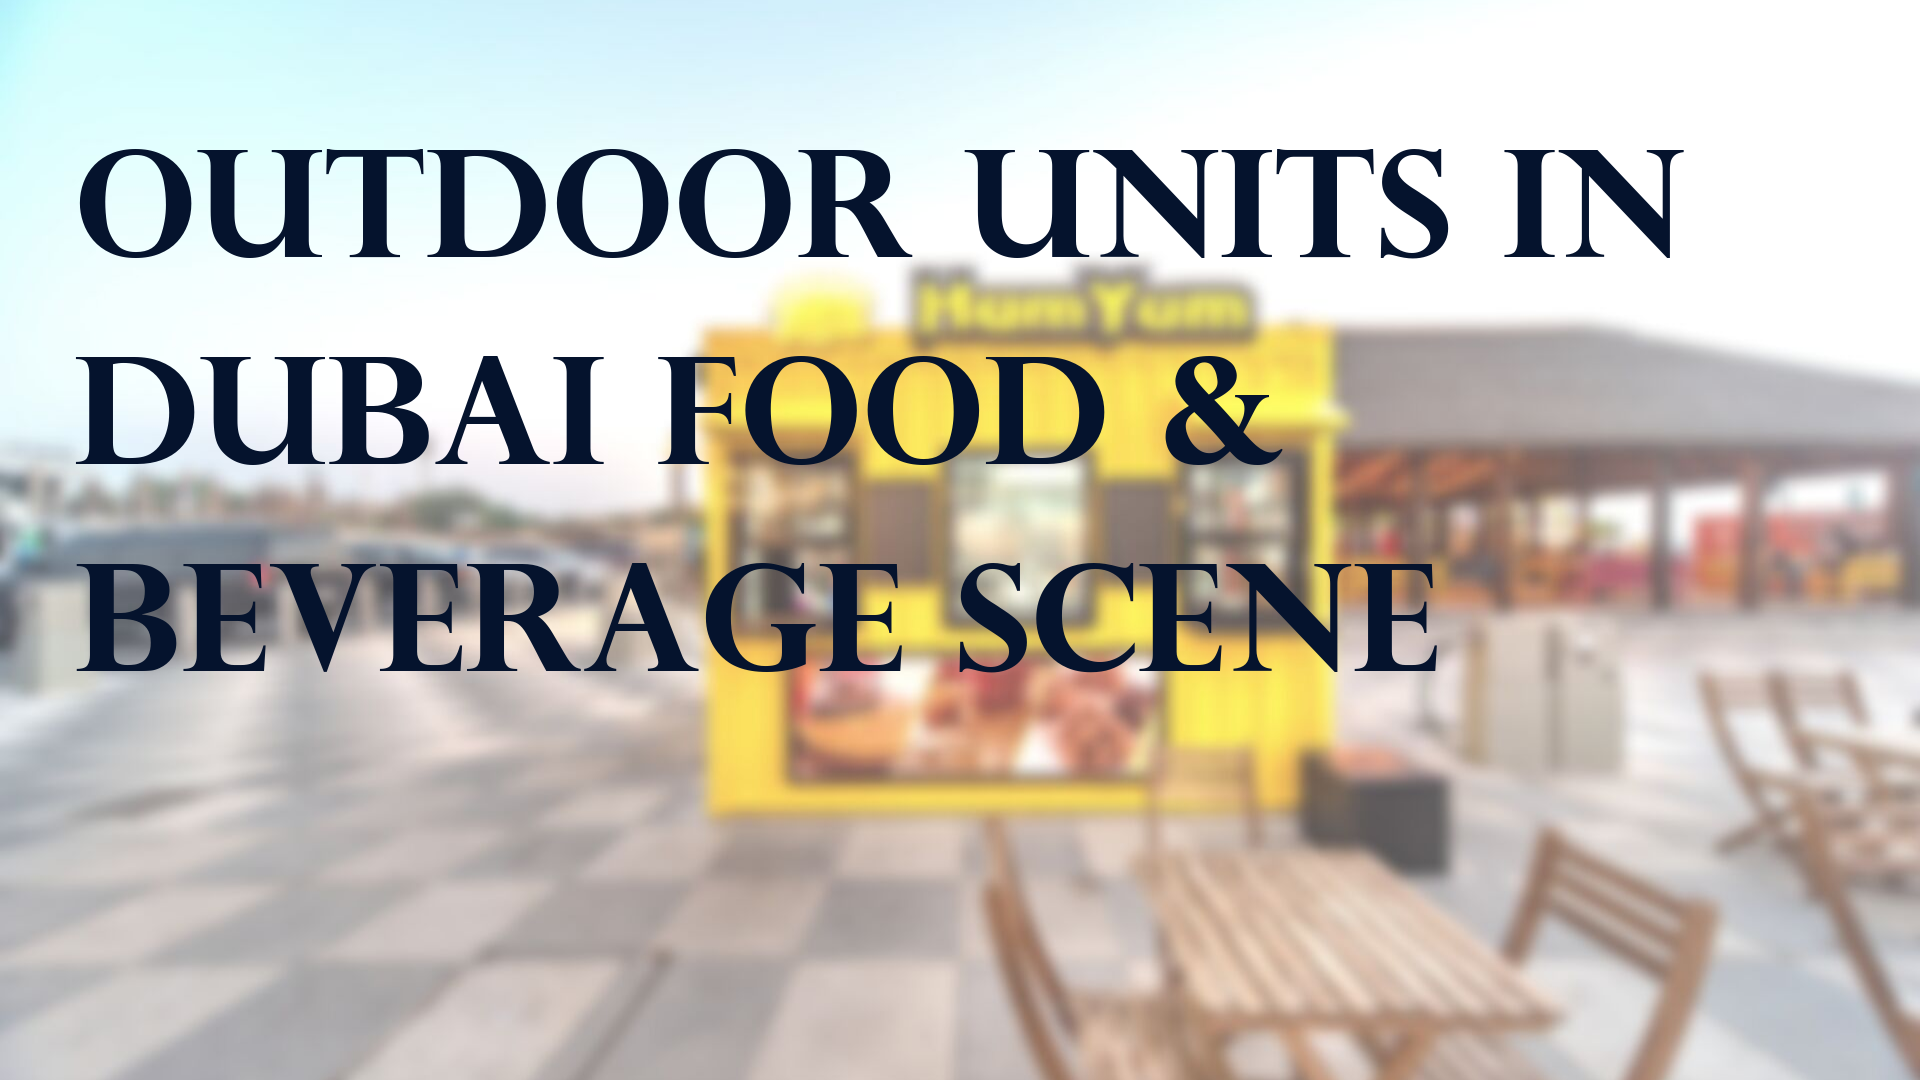 Outdoor units in dubai food & beverage scene